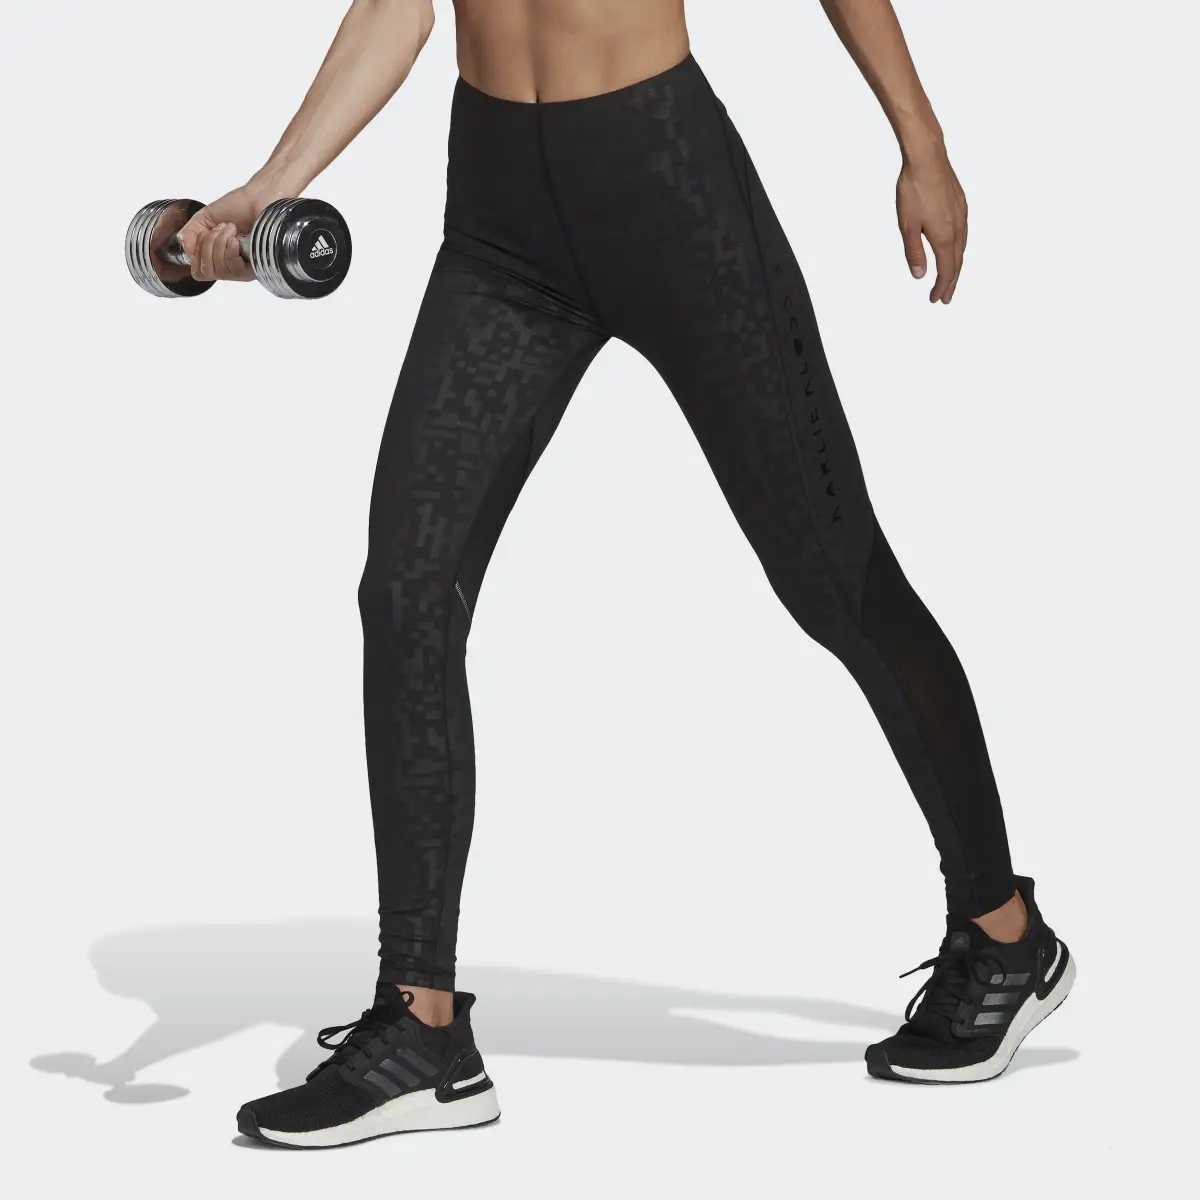 Adidas x Karlie Kloss Yoga Flow Leggings. 1